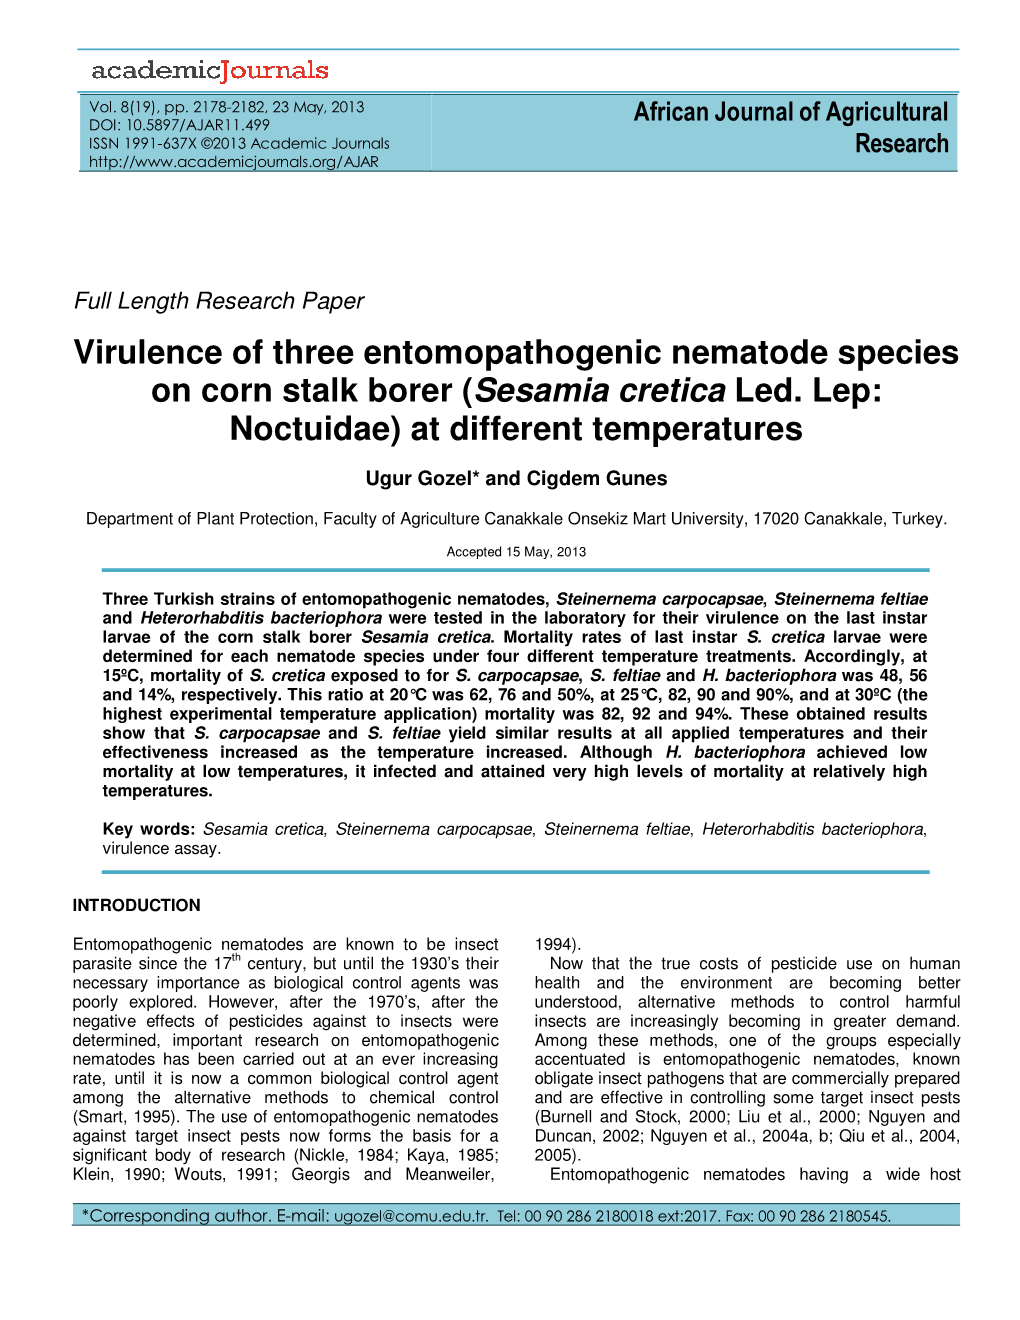 Virulence of Three Entomopathogenic Nematode Species on Corn Stalk Borer ( Sesamia Cretica Led